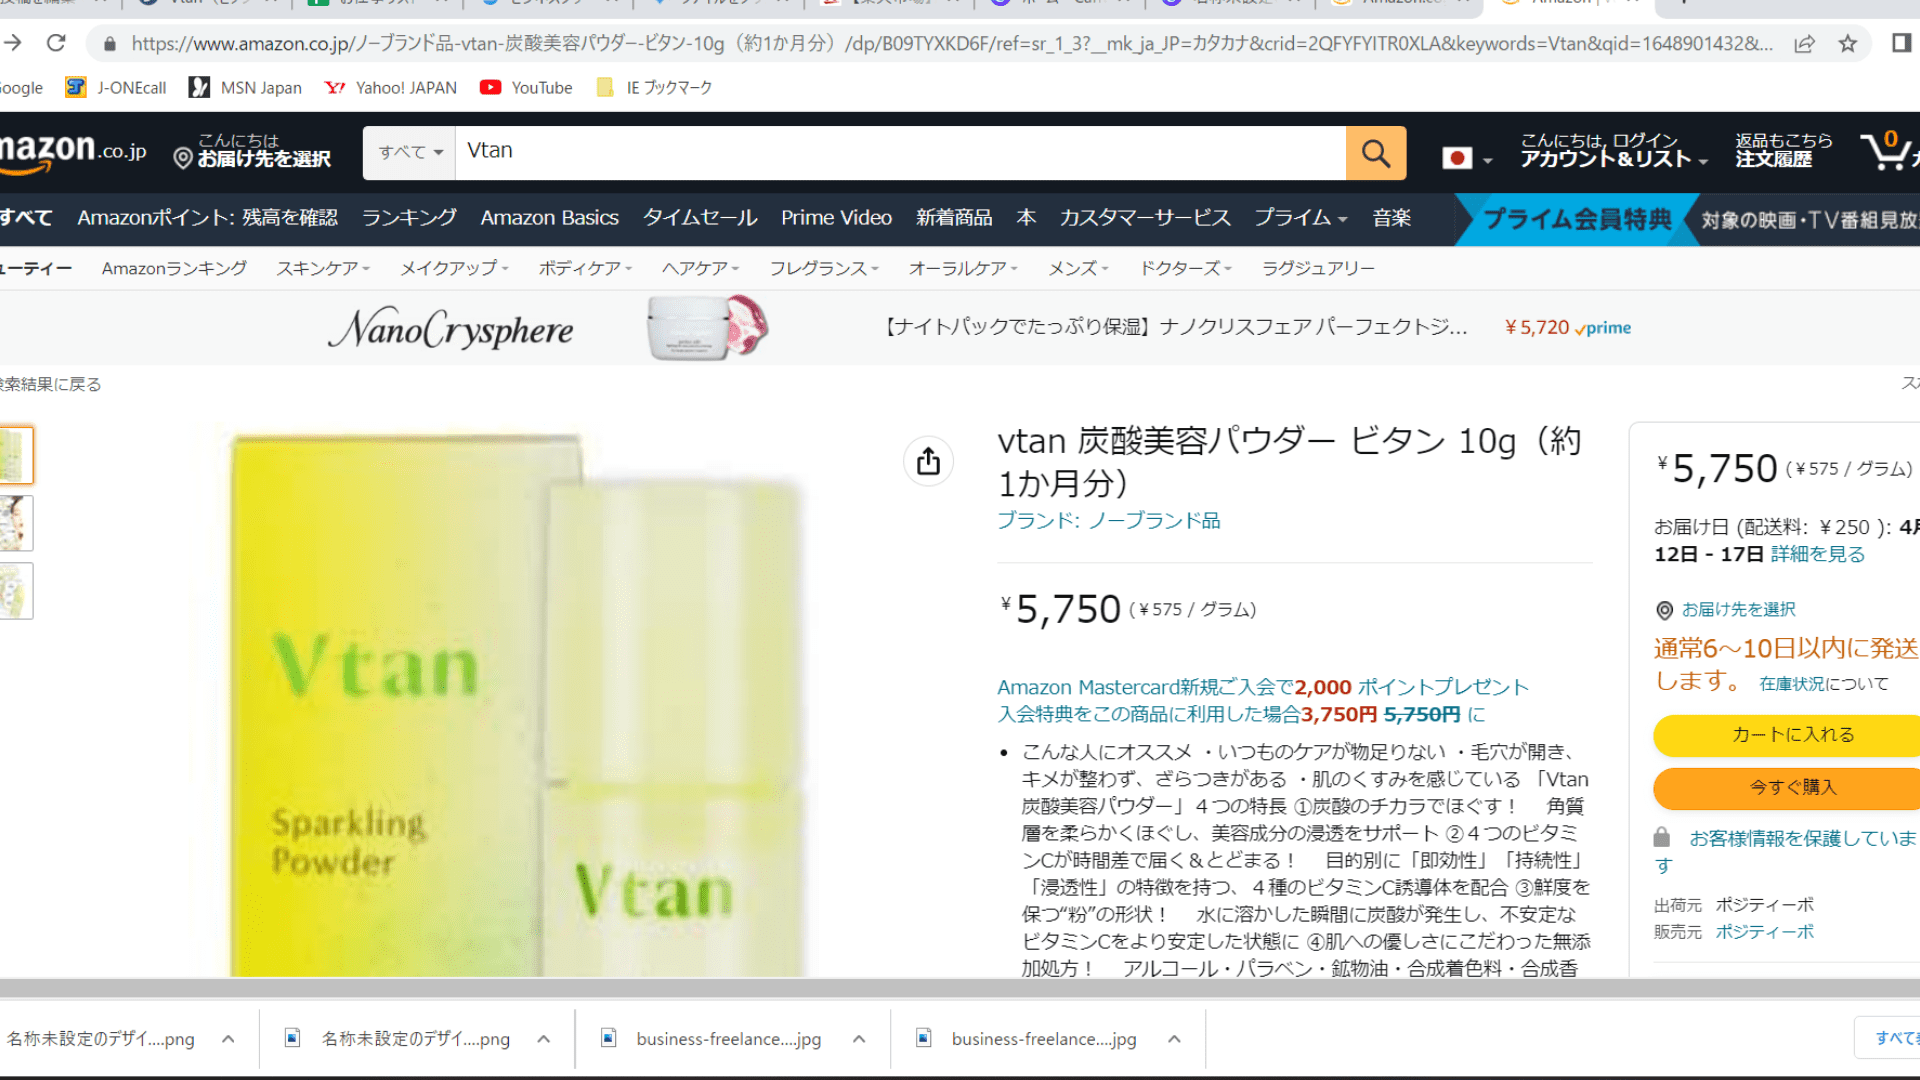 Vtan（ビタン）の販売店舗はAmazon？